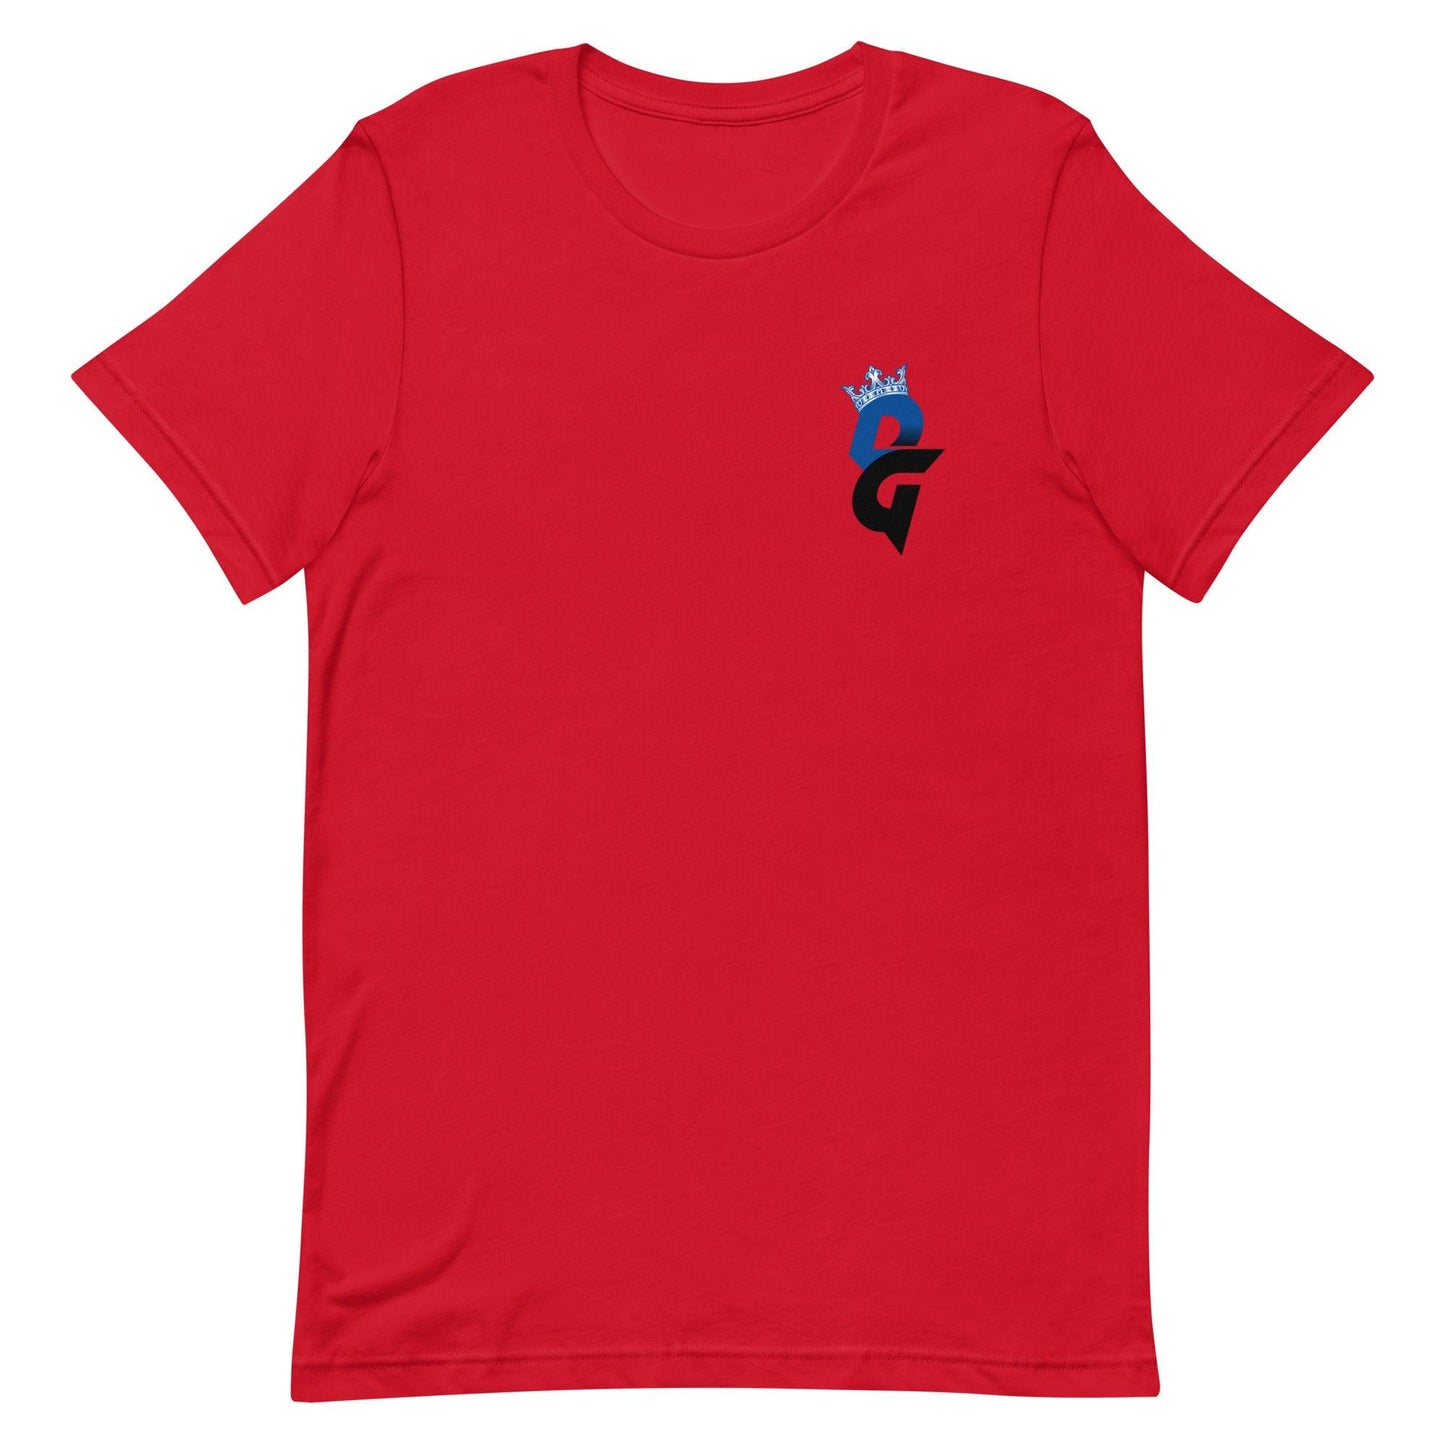 Darren Grainger "Essential" t-shirt - Fan Arch